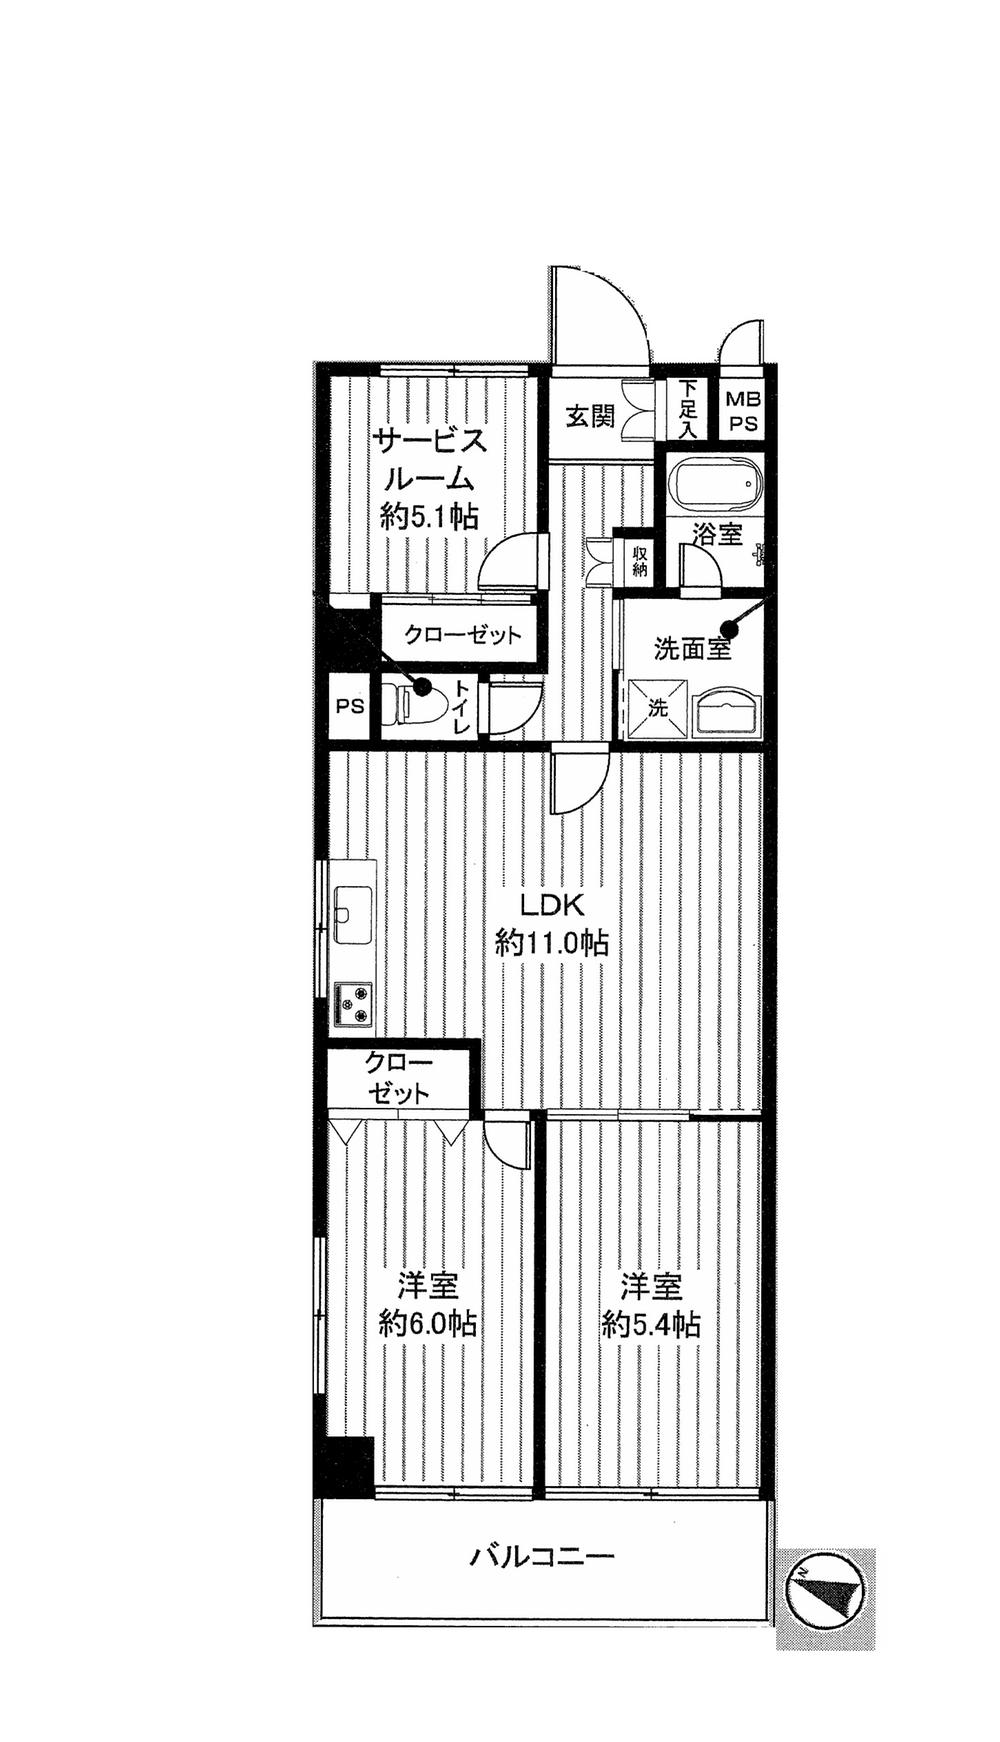 Floor plan. 2LDK + S (storeroom), Price 19,800,000 yen, Occupied area 60.75 sq m , Balcony area 6.49 sq m